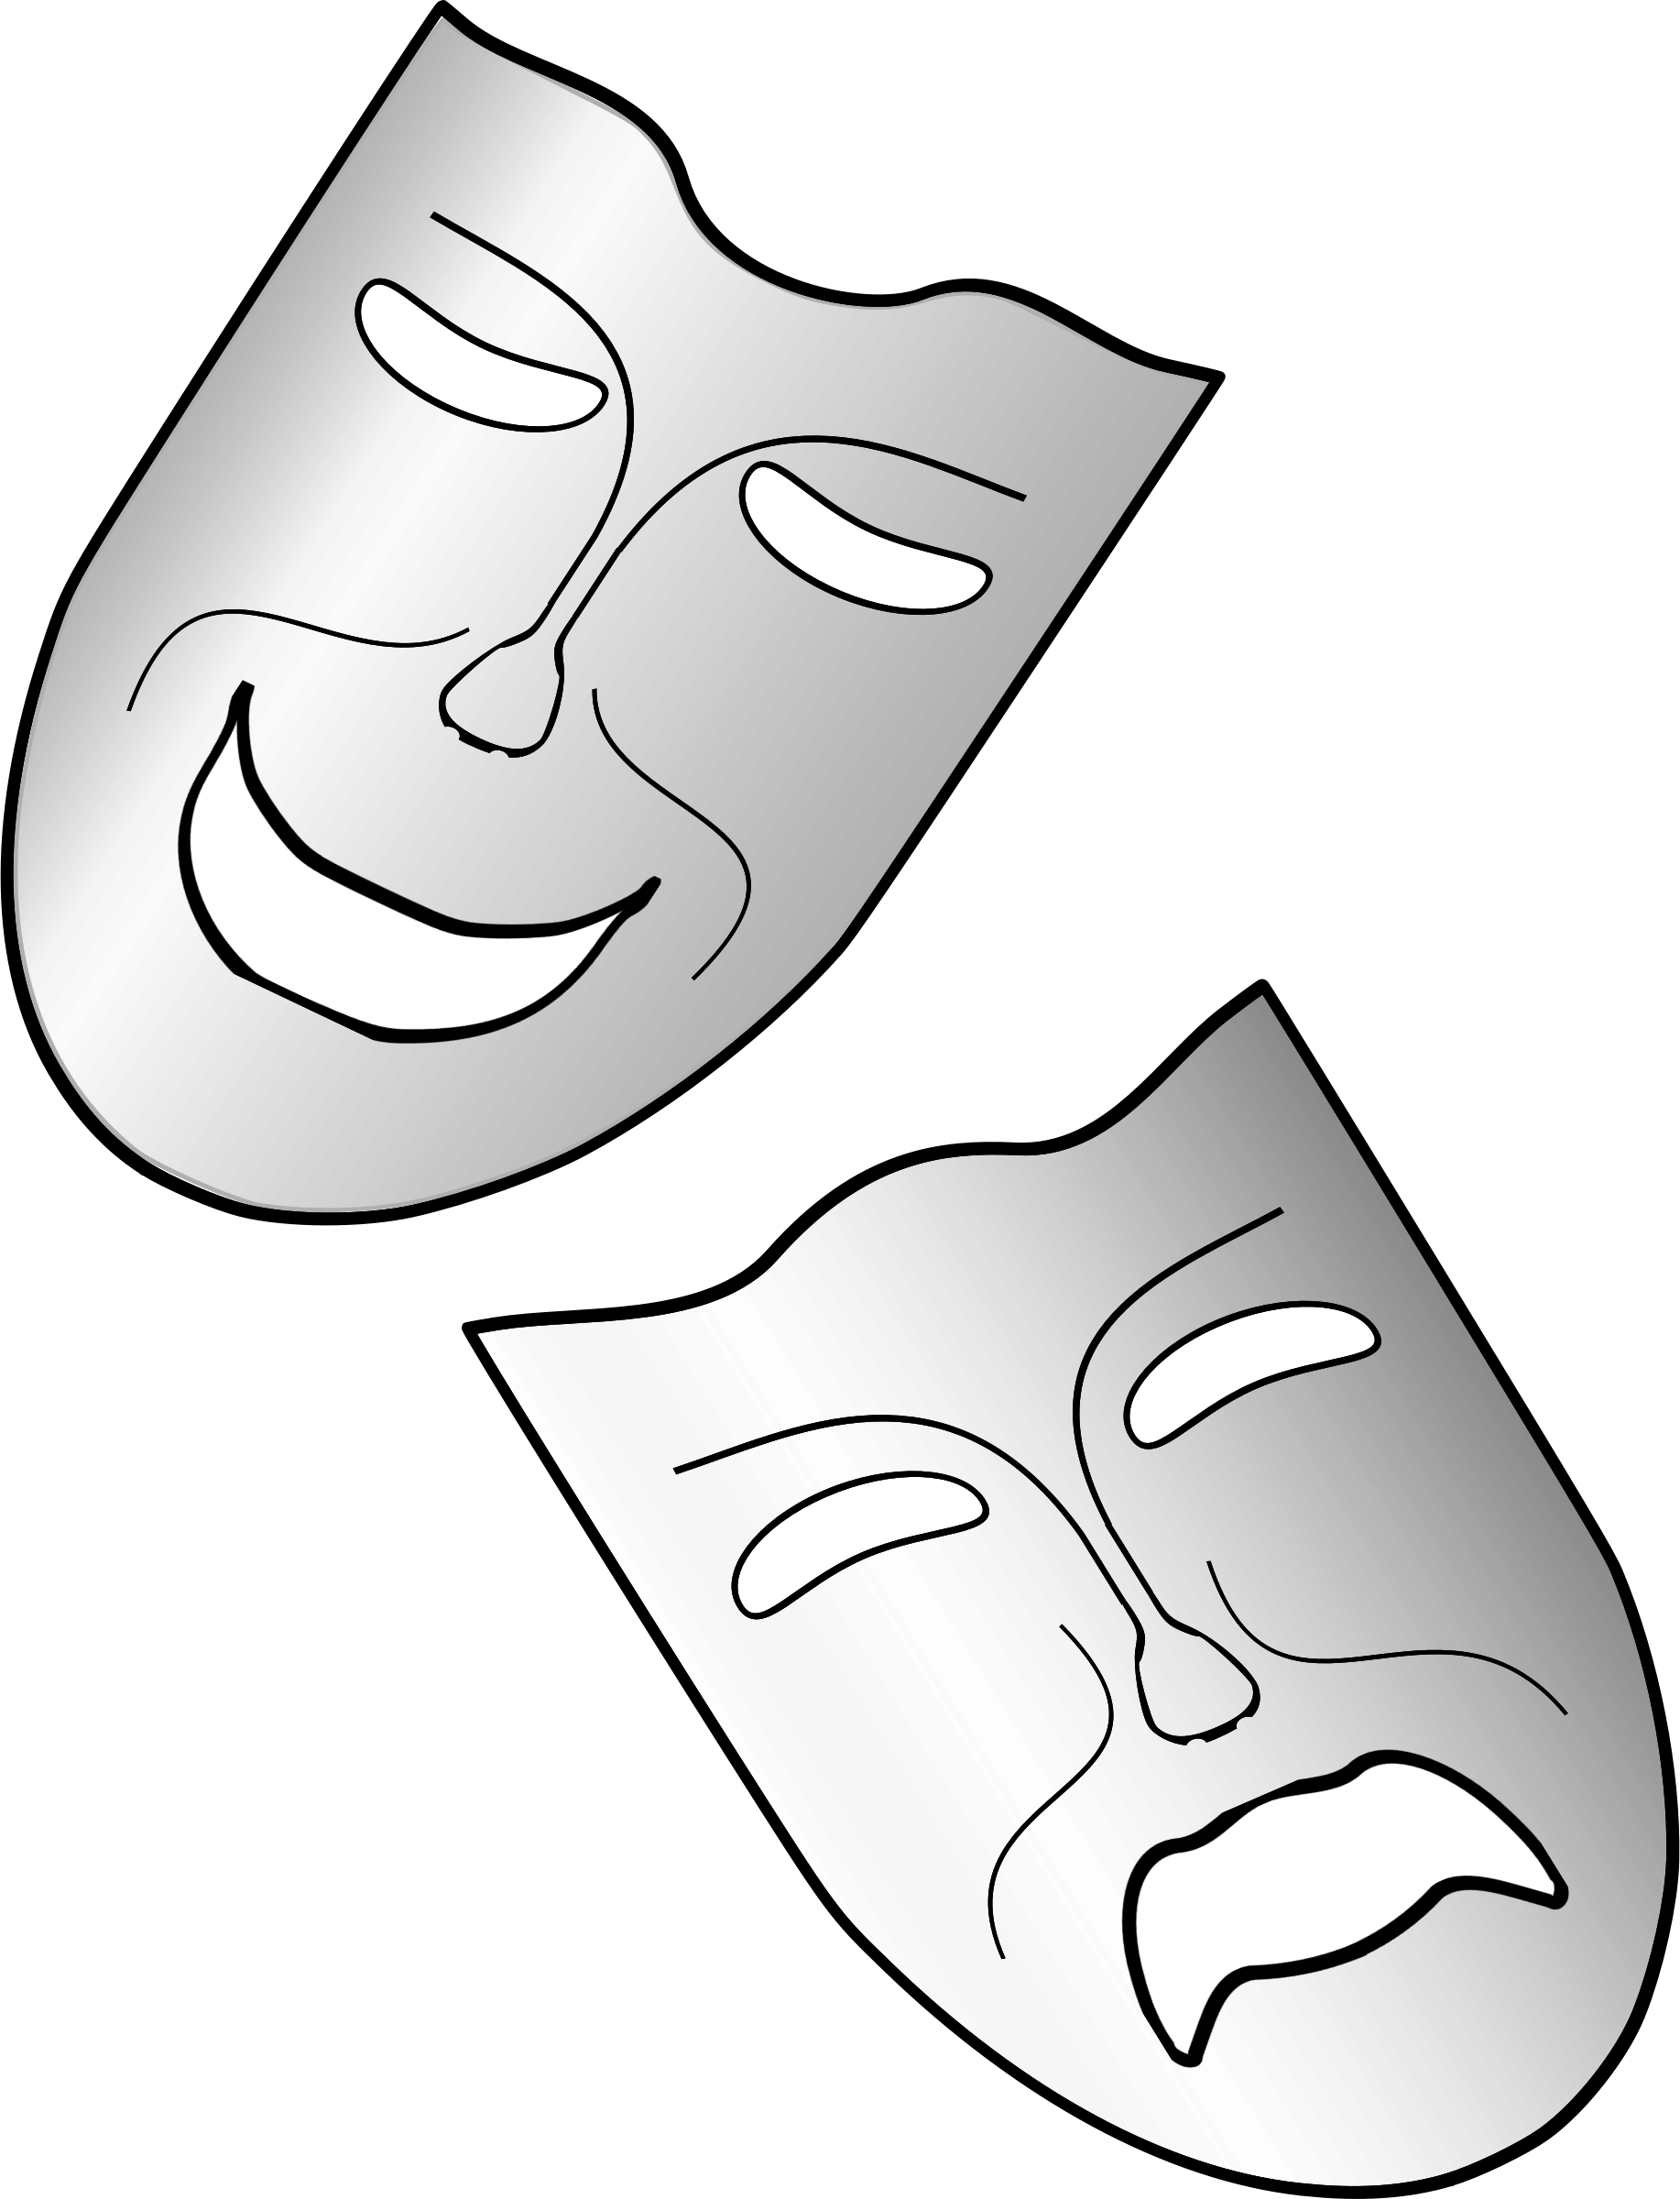 Маски театра рисунок. Театральные маски. Театральная маска трафарет. Театральная маска раскраска. Театральные маски раскраски для детей.